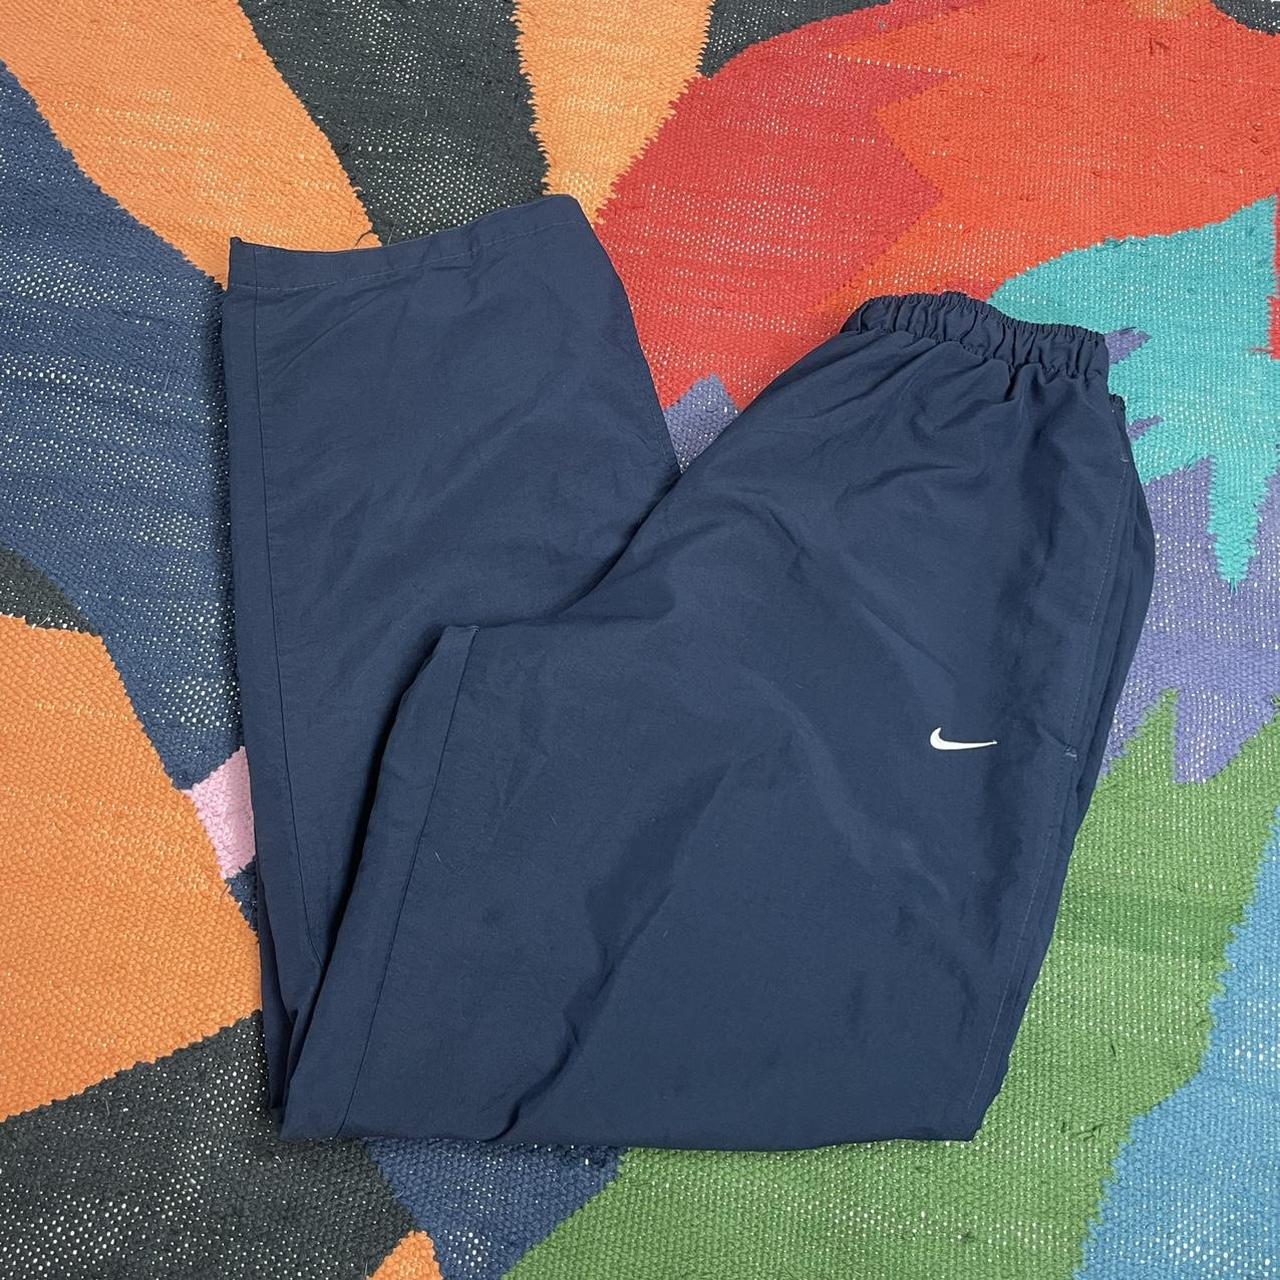 Vintage Nike Tracksuit Pants/Bottoms, Early 2000s,... - Depop